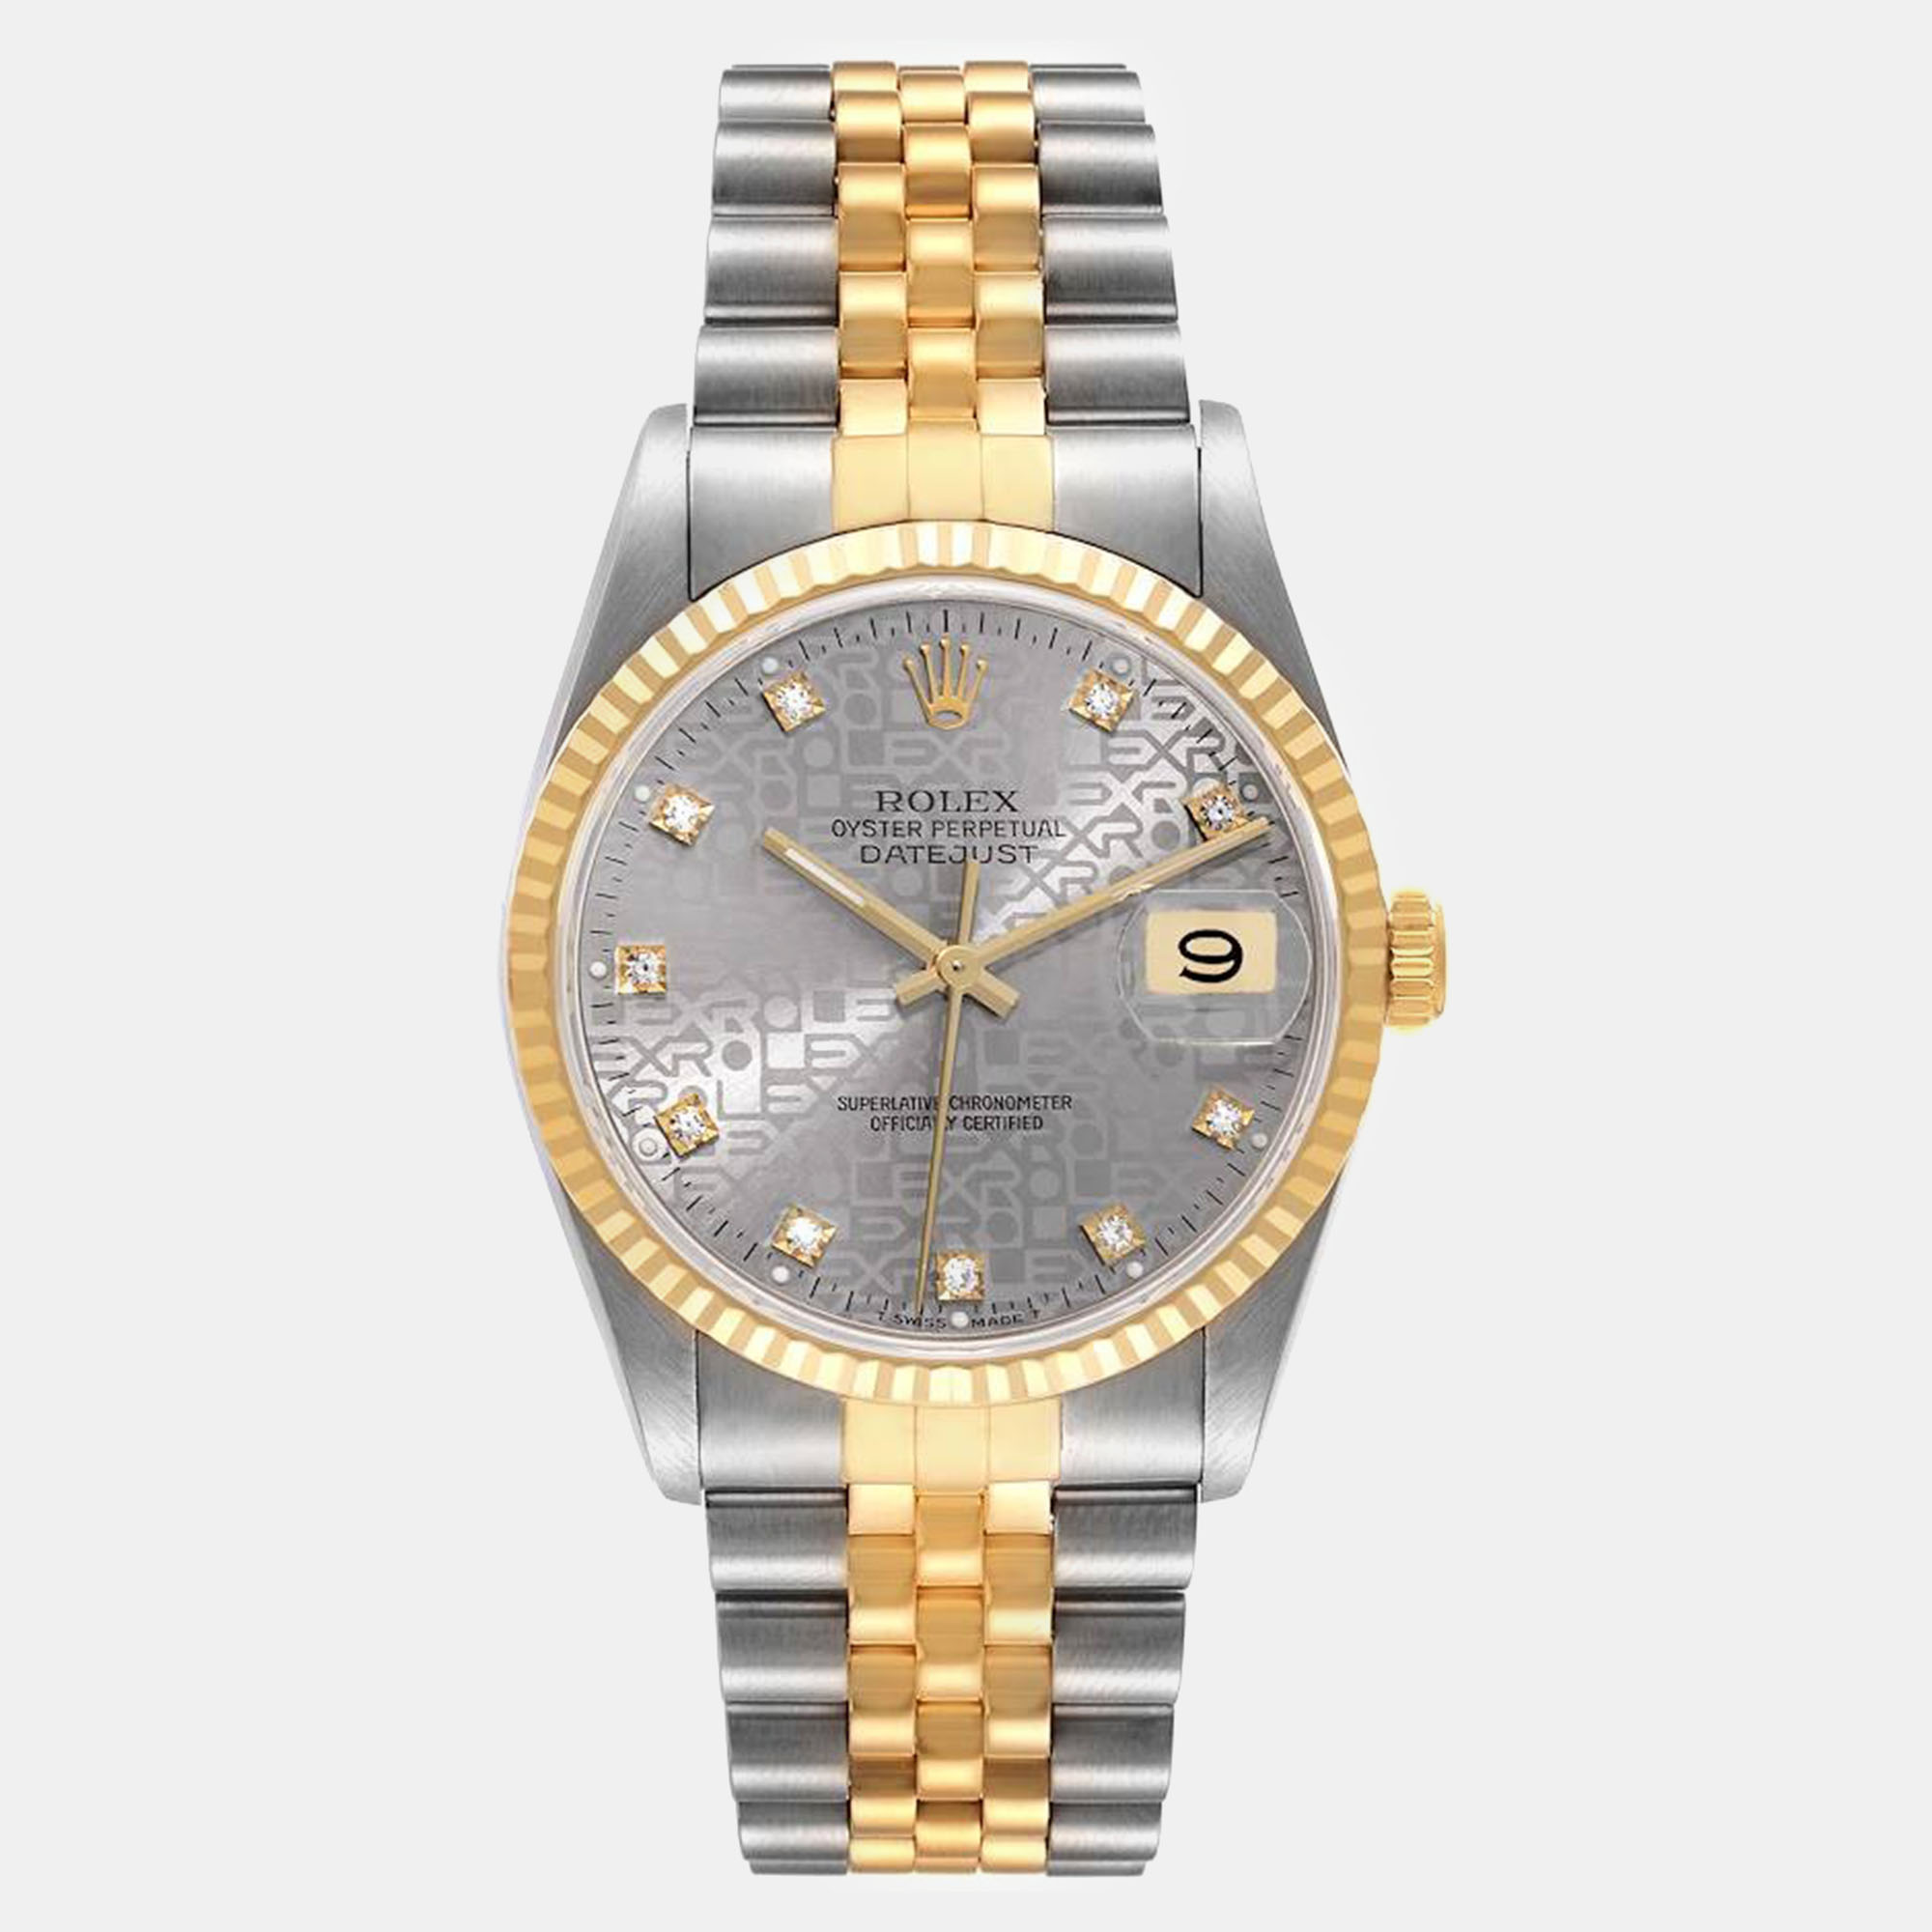 Rolex datejust anniversary diamond dial steel yellow gold watch  36.0 mm